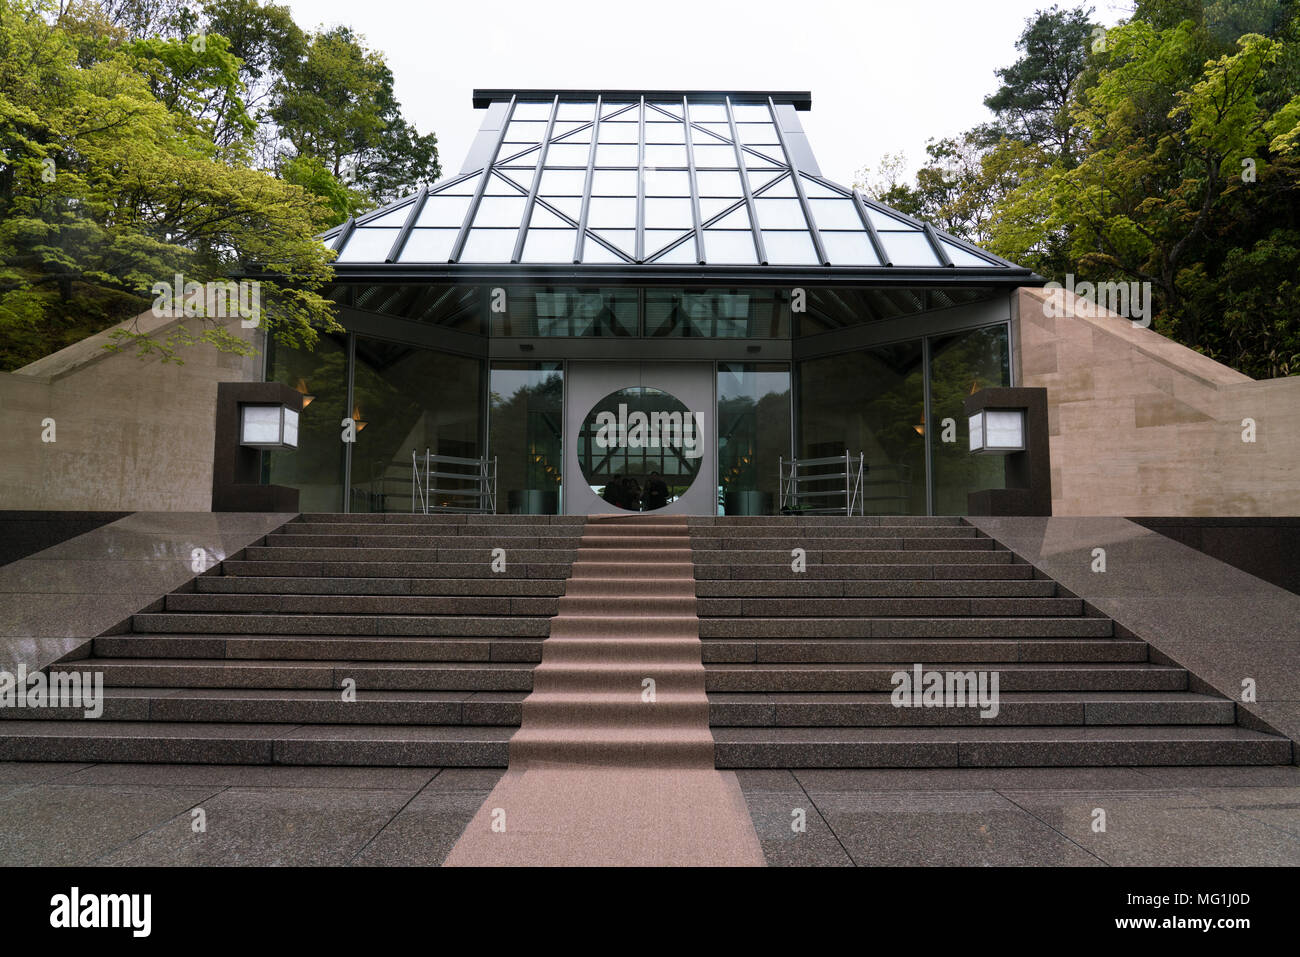 Japan's Shangri-la: I.M Pei's Miho Museum with Narration 